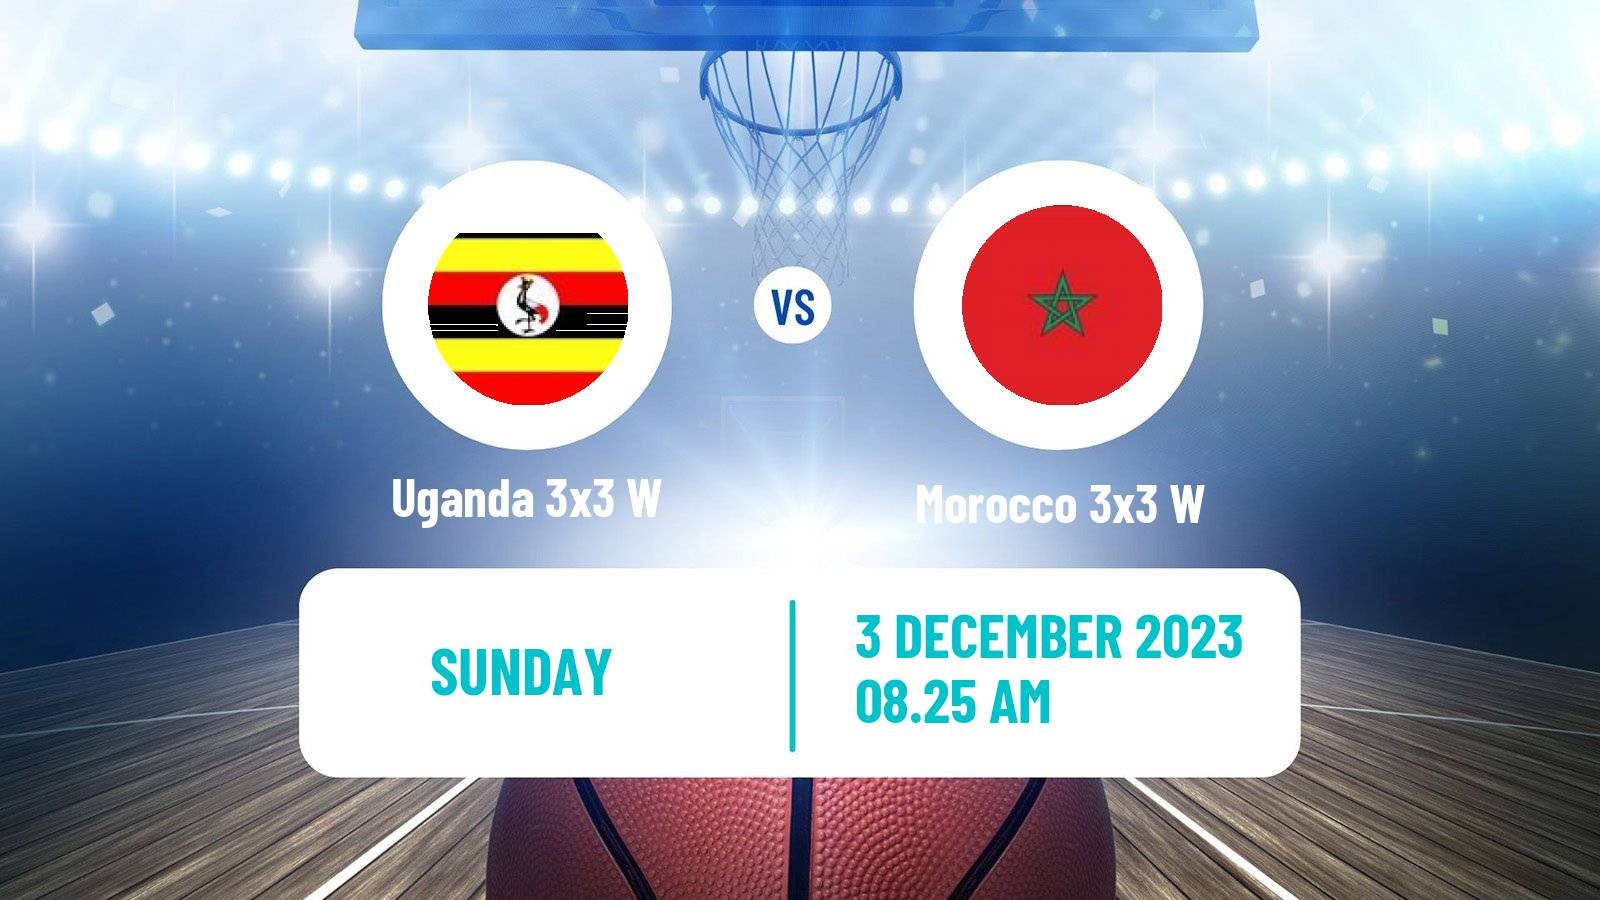 Basketball Africa Cup 3x3 Women Uganda 3x3 W - Morocco 3x3 W